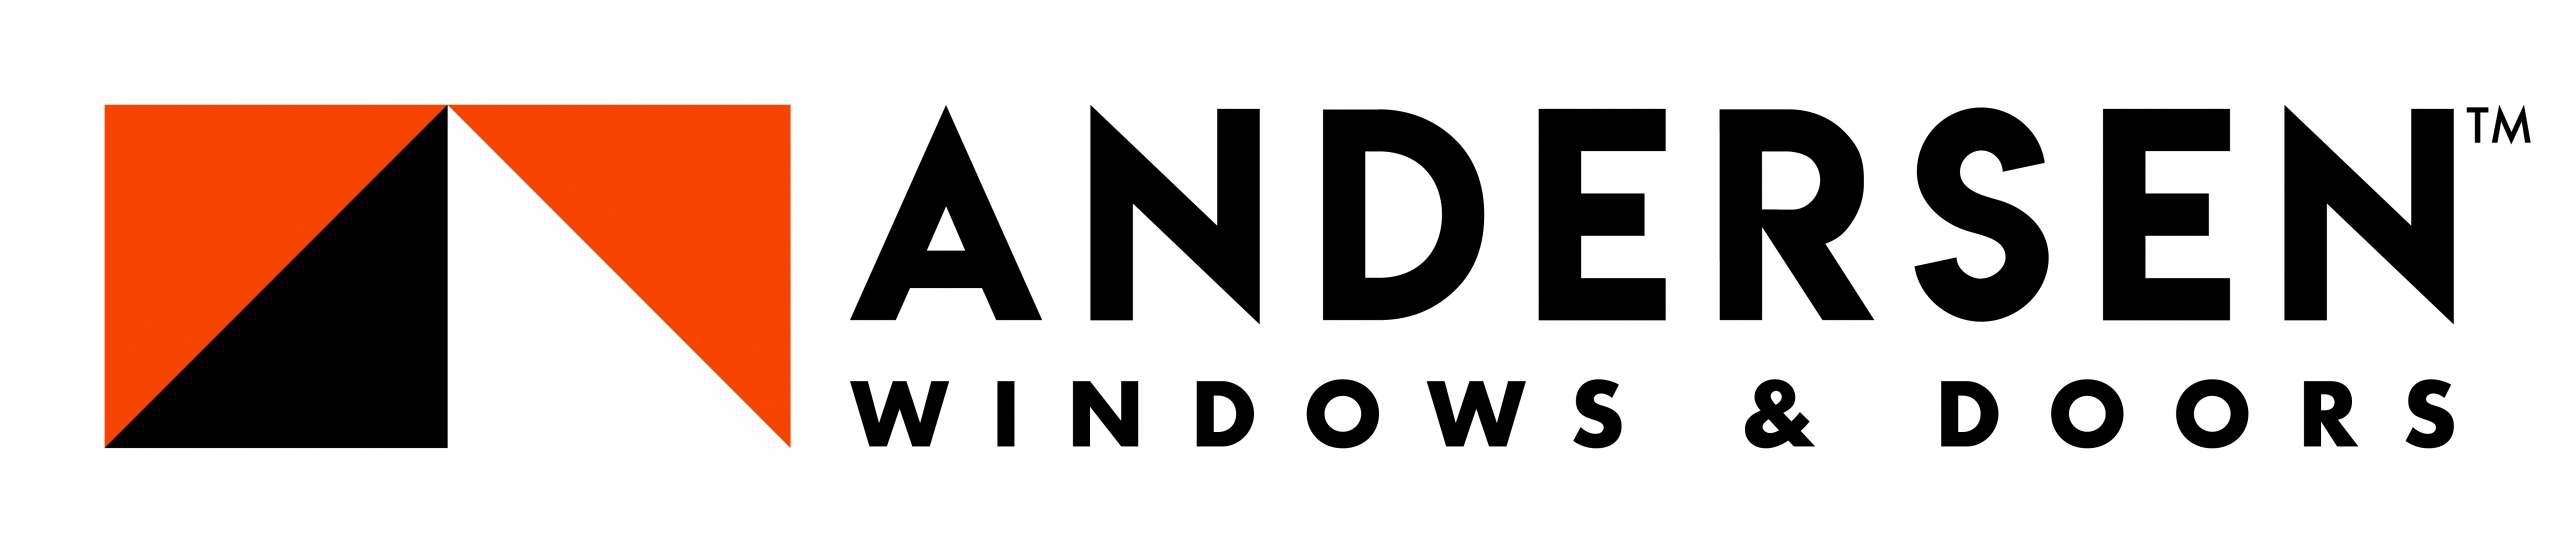 Allied Siding and Windows | Andersen Windows